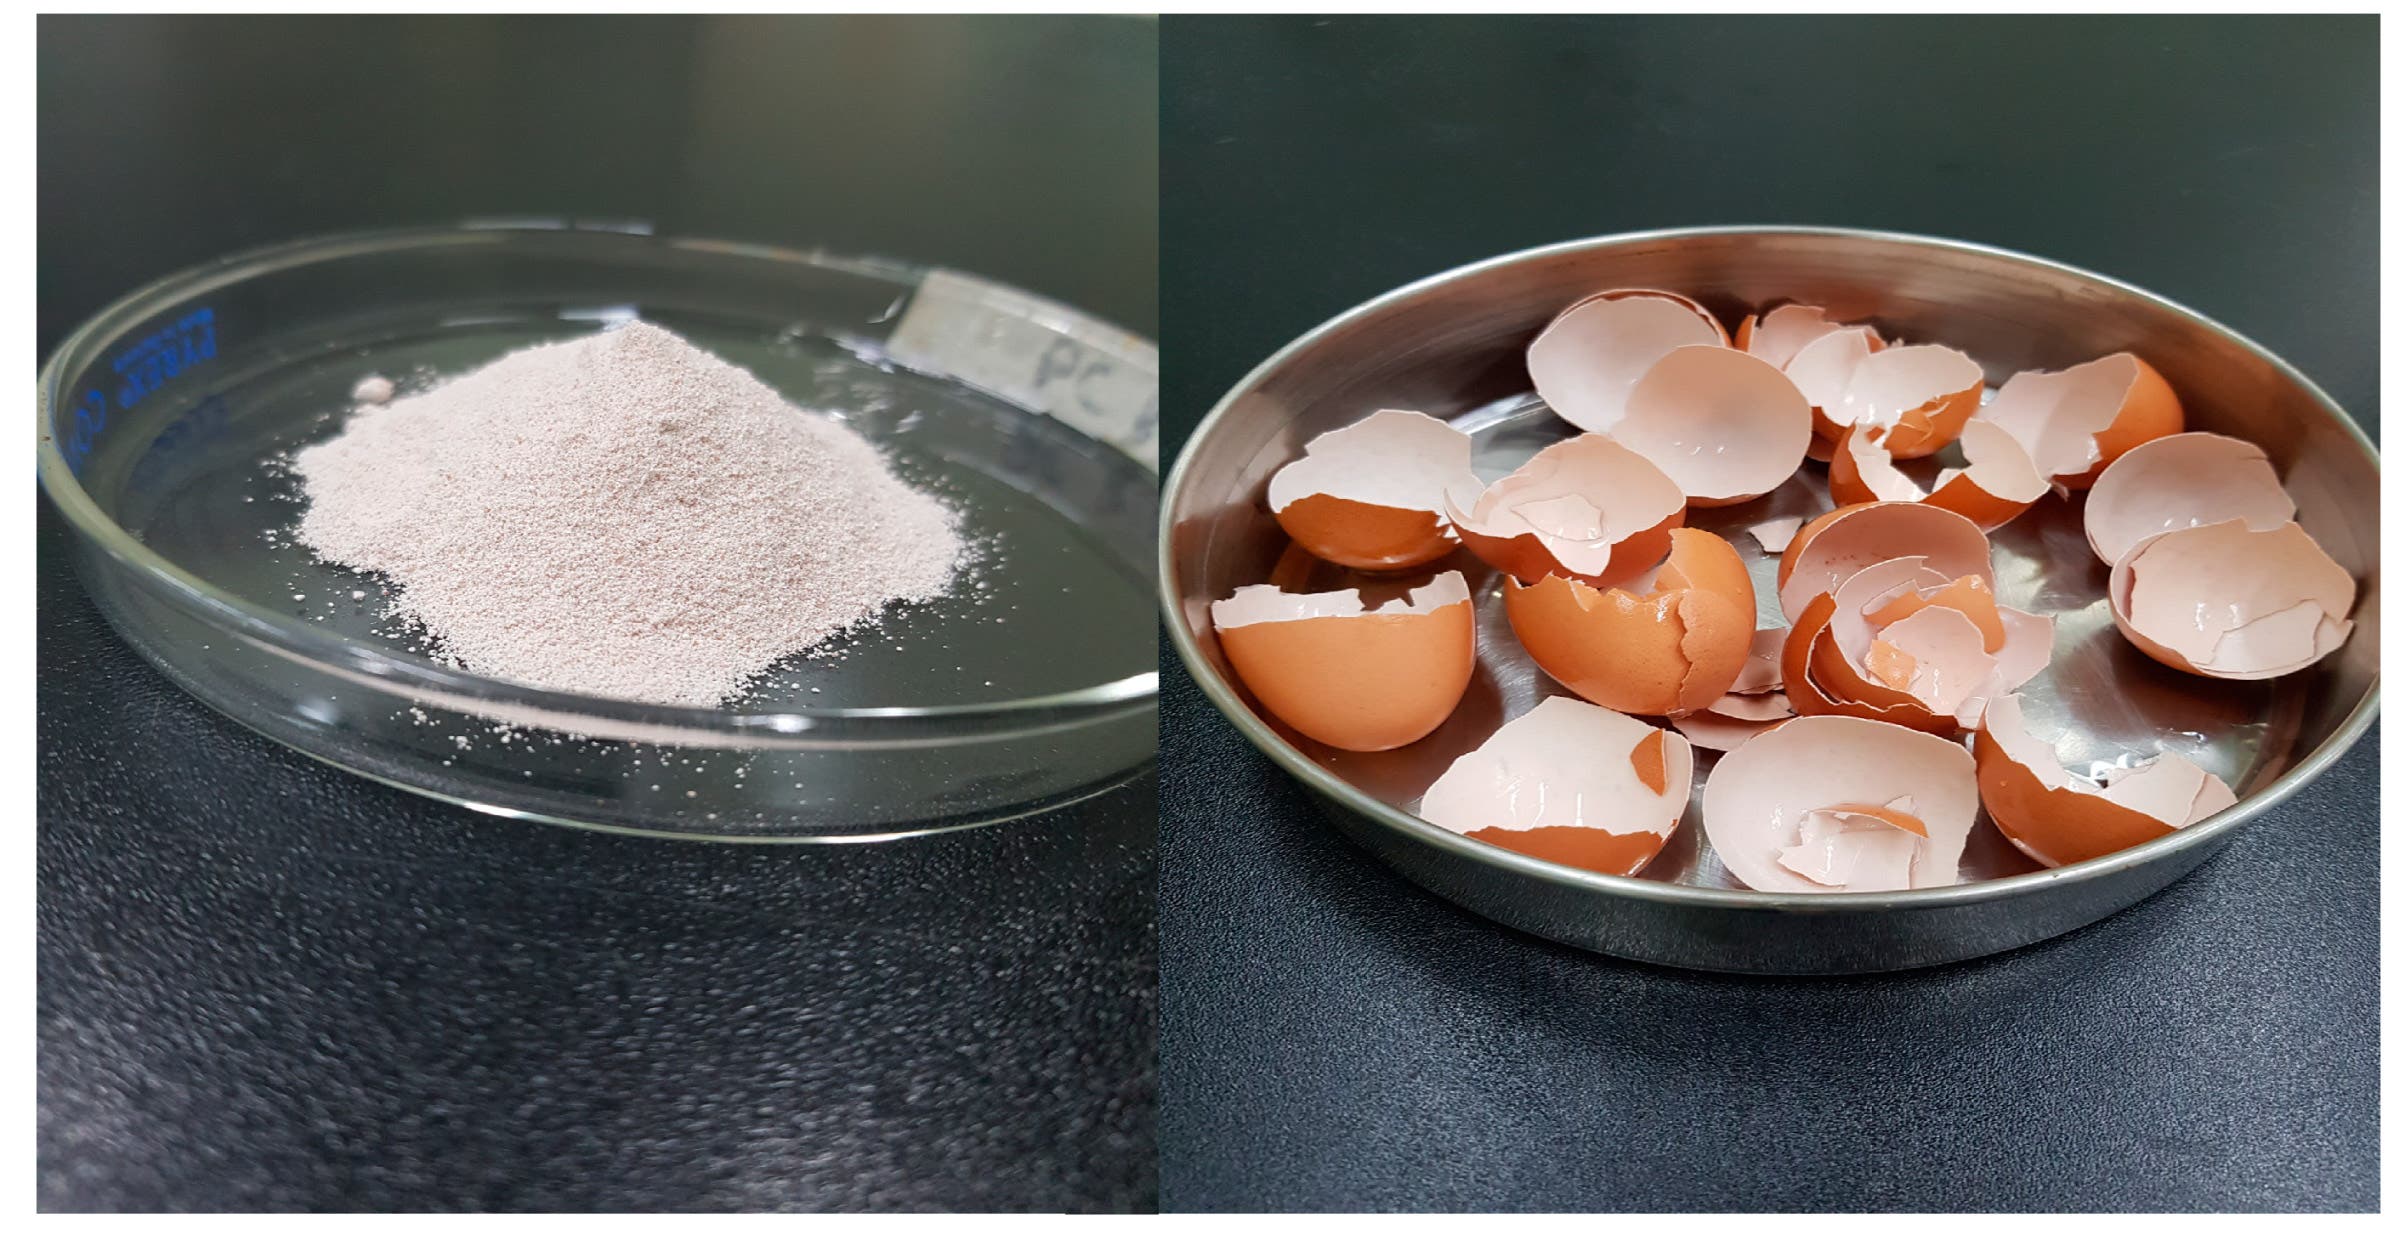 Powdered eggshells